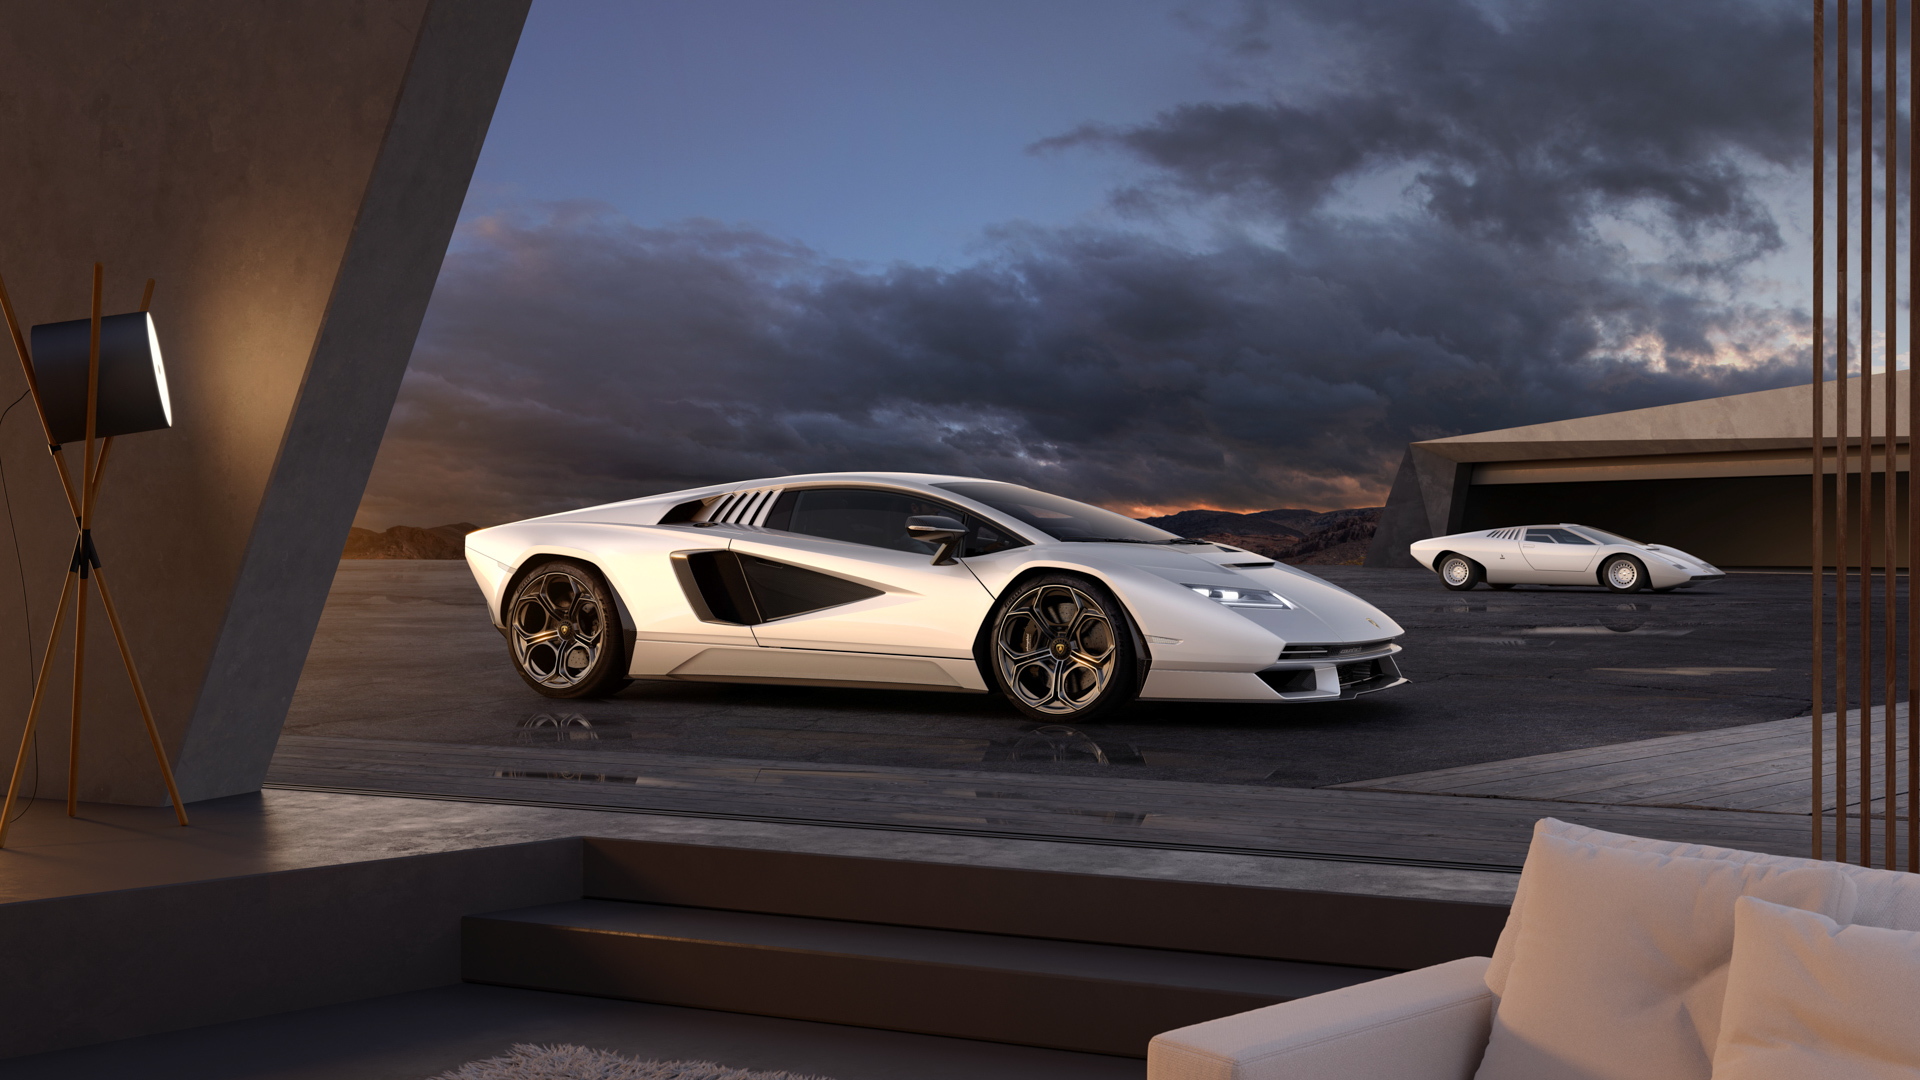 New 2022 Lamborghini Countach LPI 800-4 hits the road for the